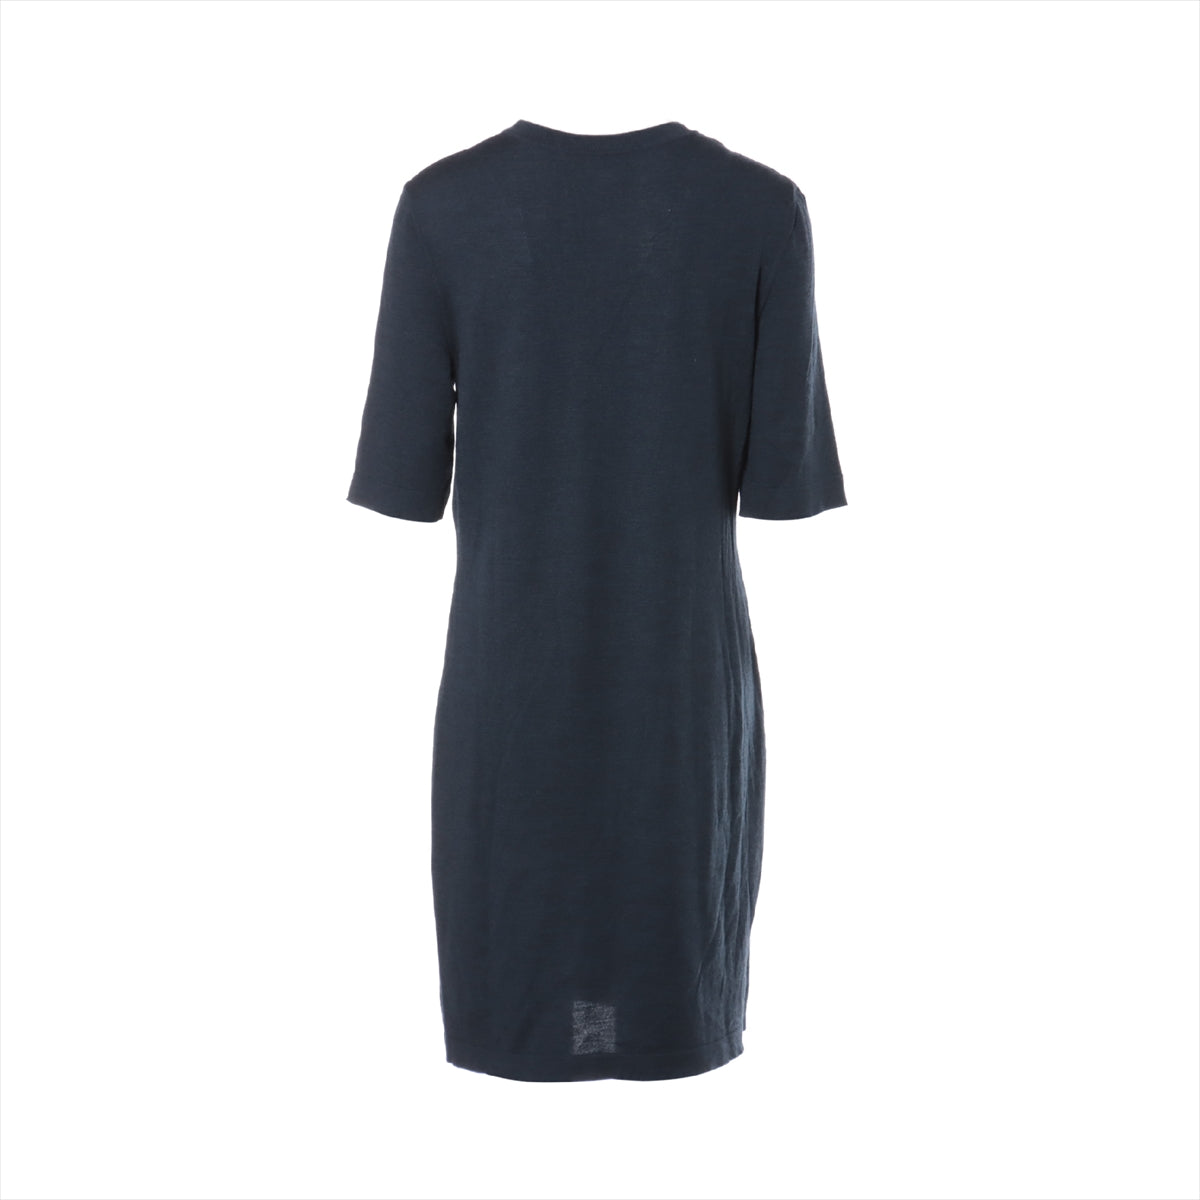 Chanel Wool Dress 40 Ladies' Navy blue  Coco mark emblem patch P46568K05822